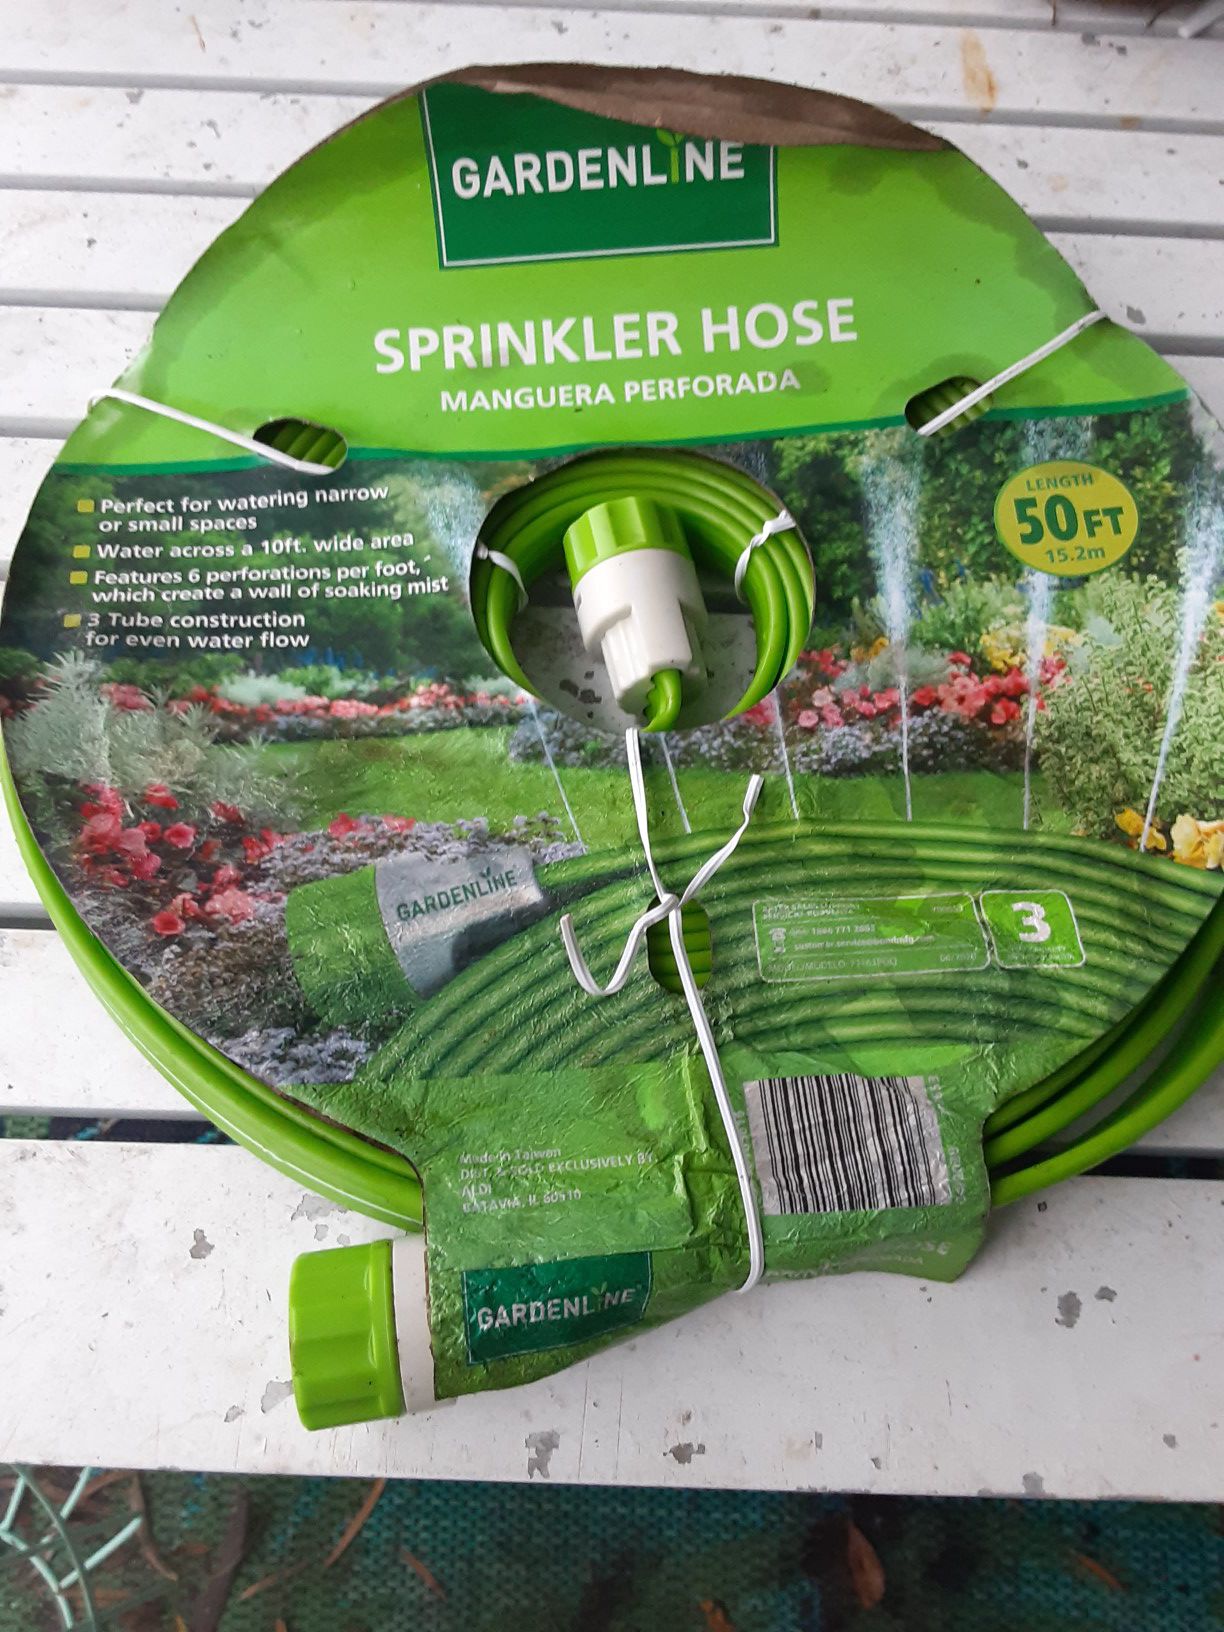 Gardenline sprinkler hose